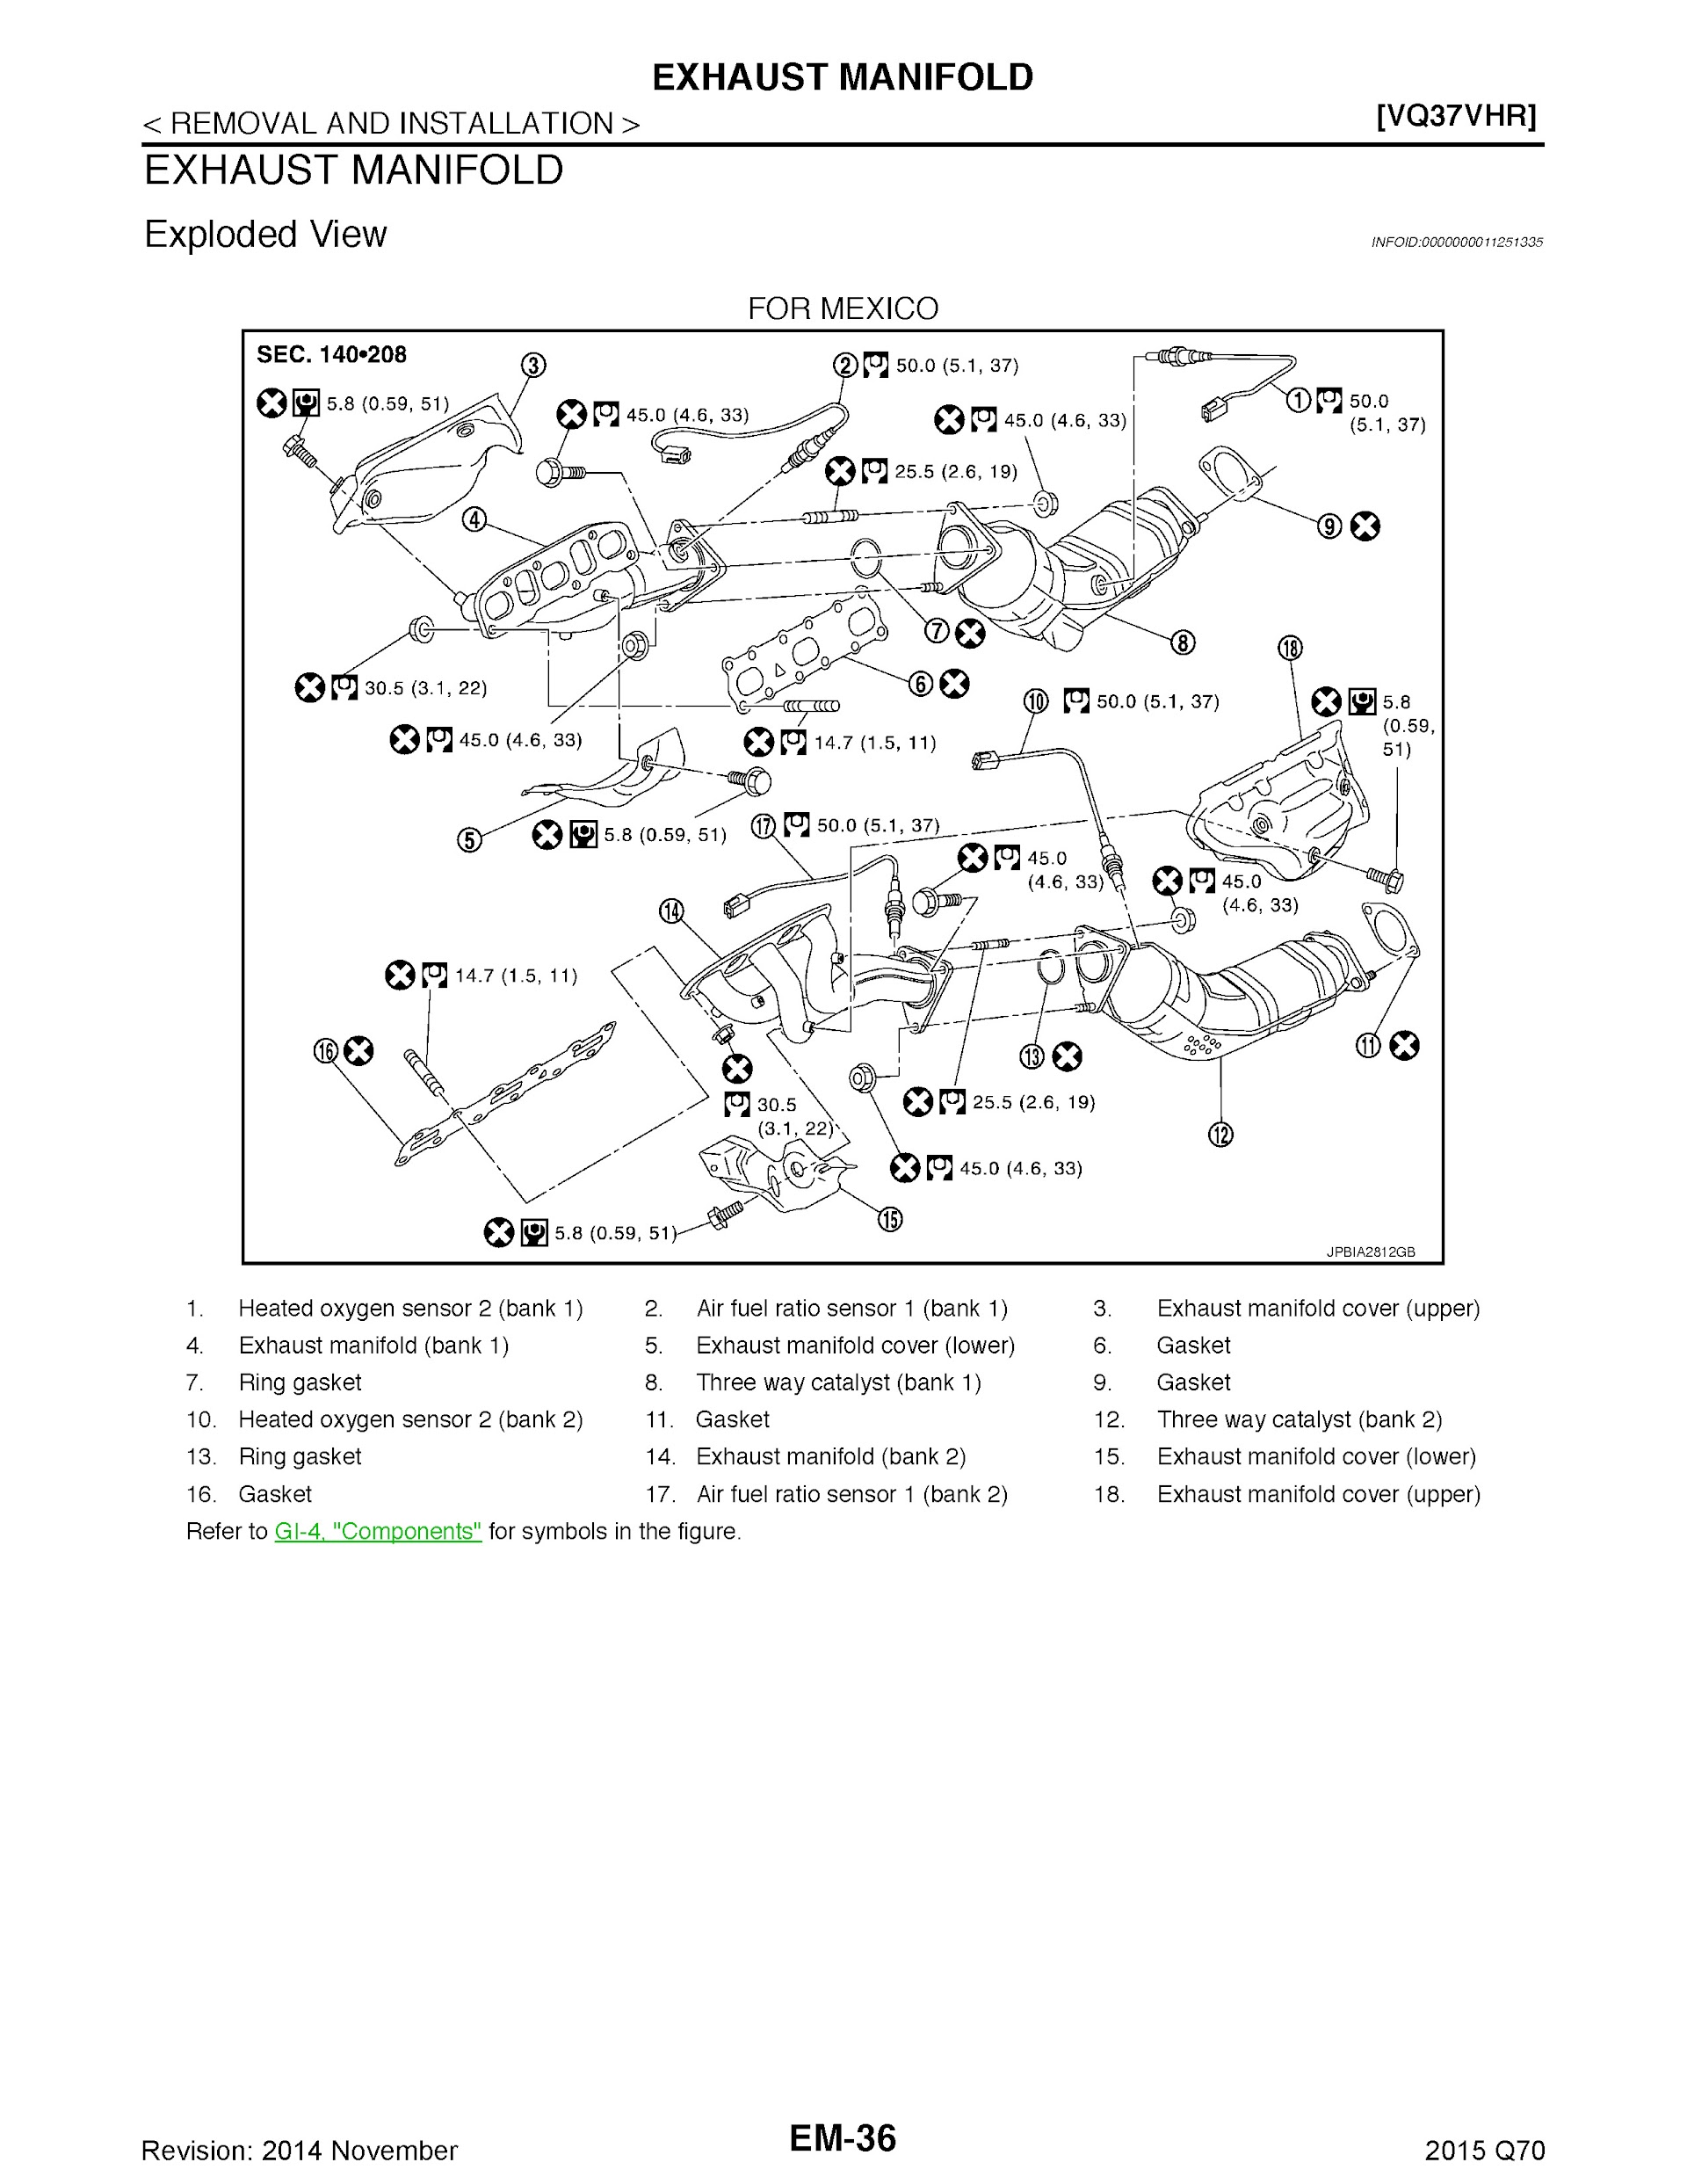 2015 Infiniti Q70 Repair Manual, Exhaust Manifold